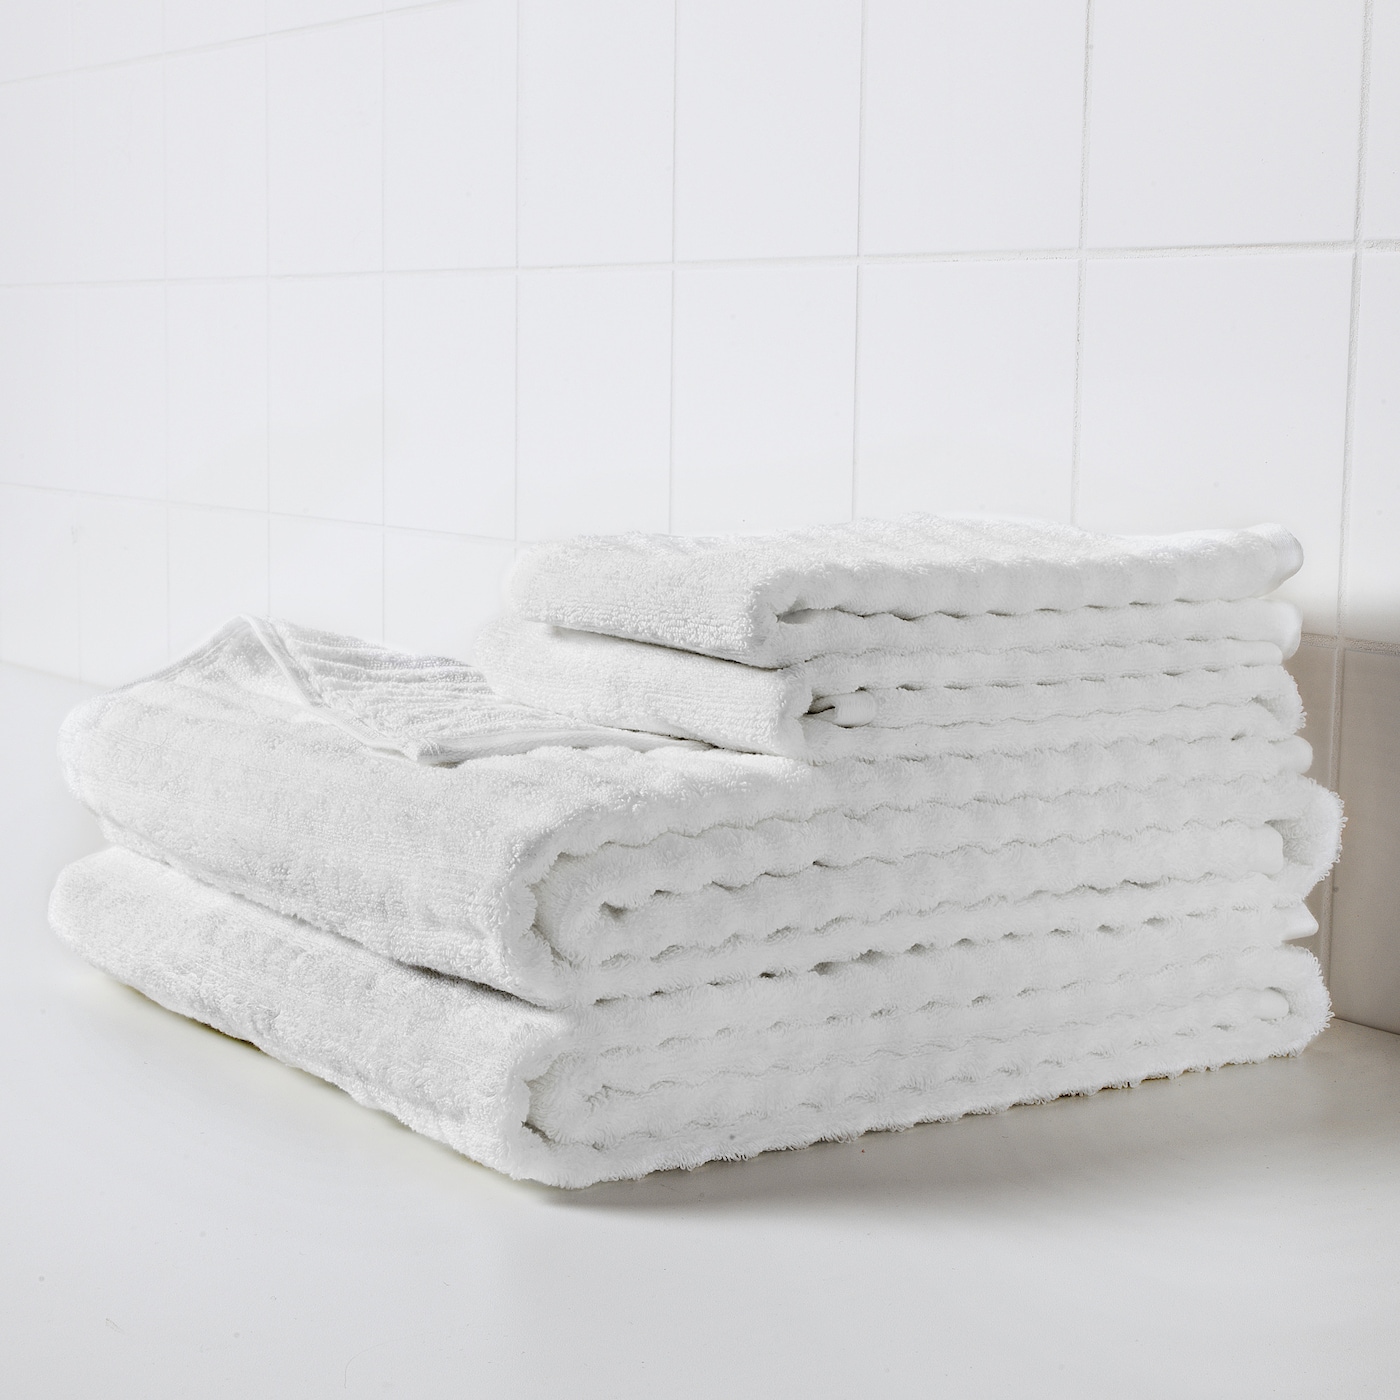 Полотенце икеа купить. Полотенце FLODALEN икеа. Ikea White Towel. Krama крама полотенце белый 30x30. Икеа белое банное полотенце.